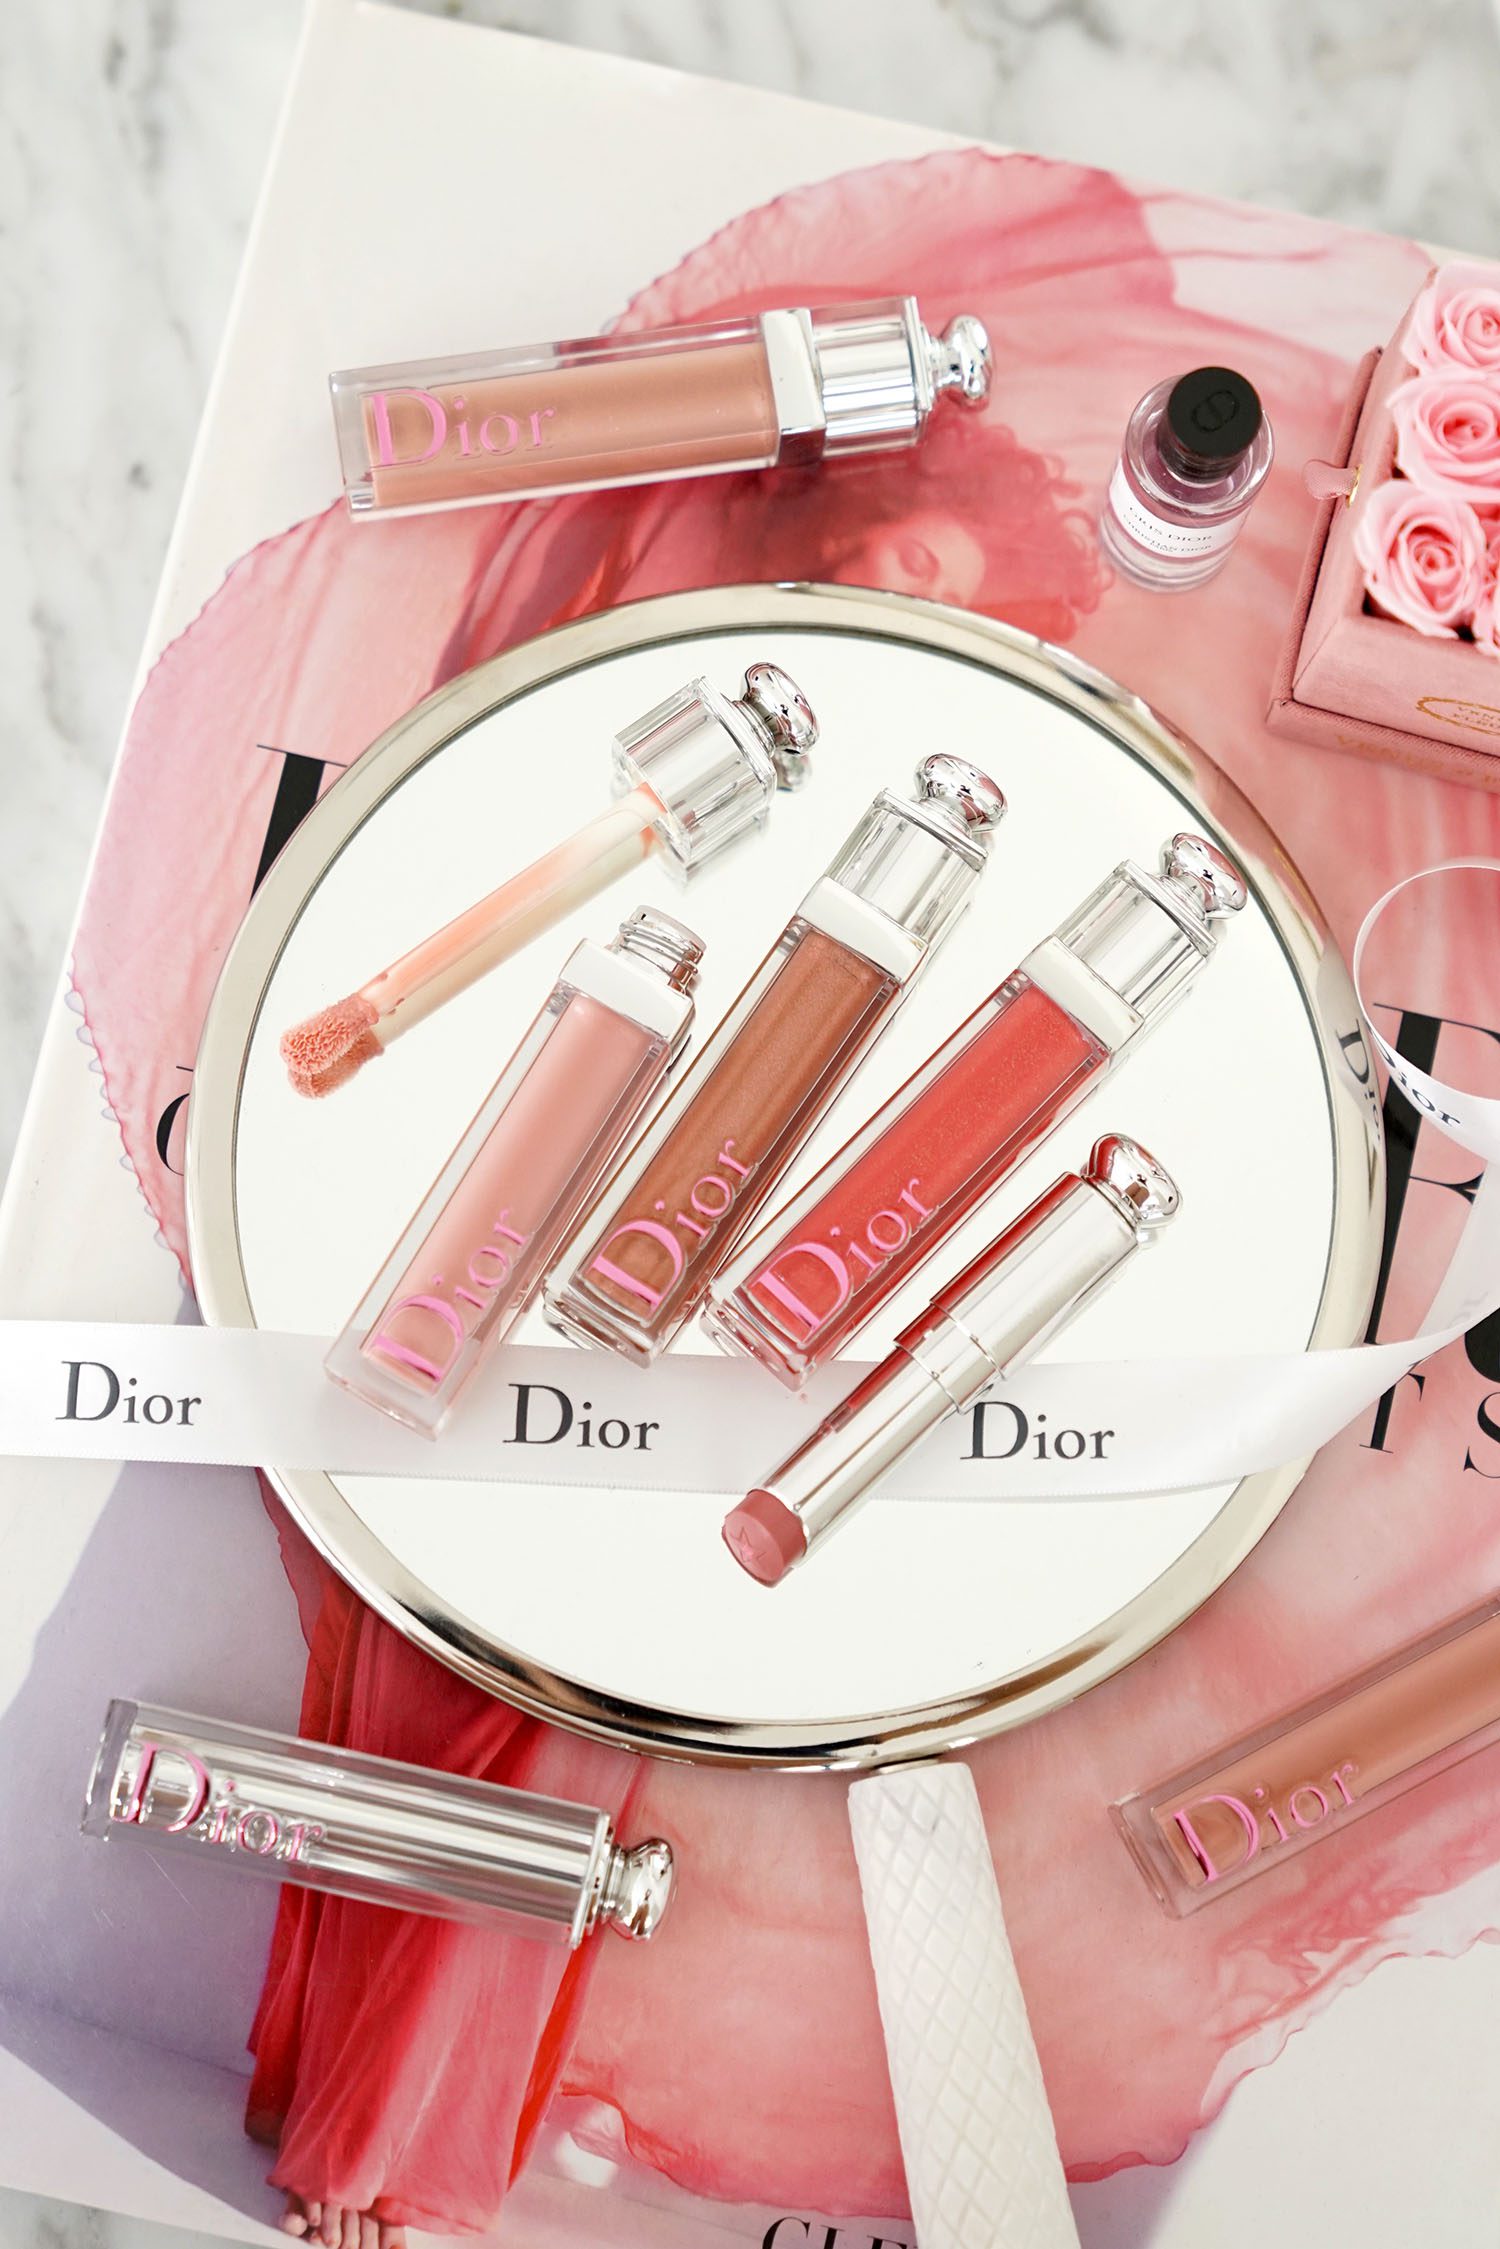 Dior Addict Stellar Gloss + Stellar Halo Shine Lipsticks - The